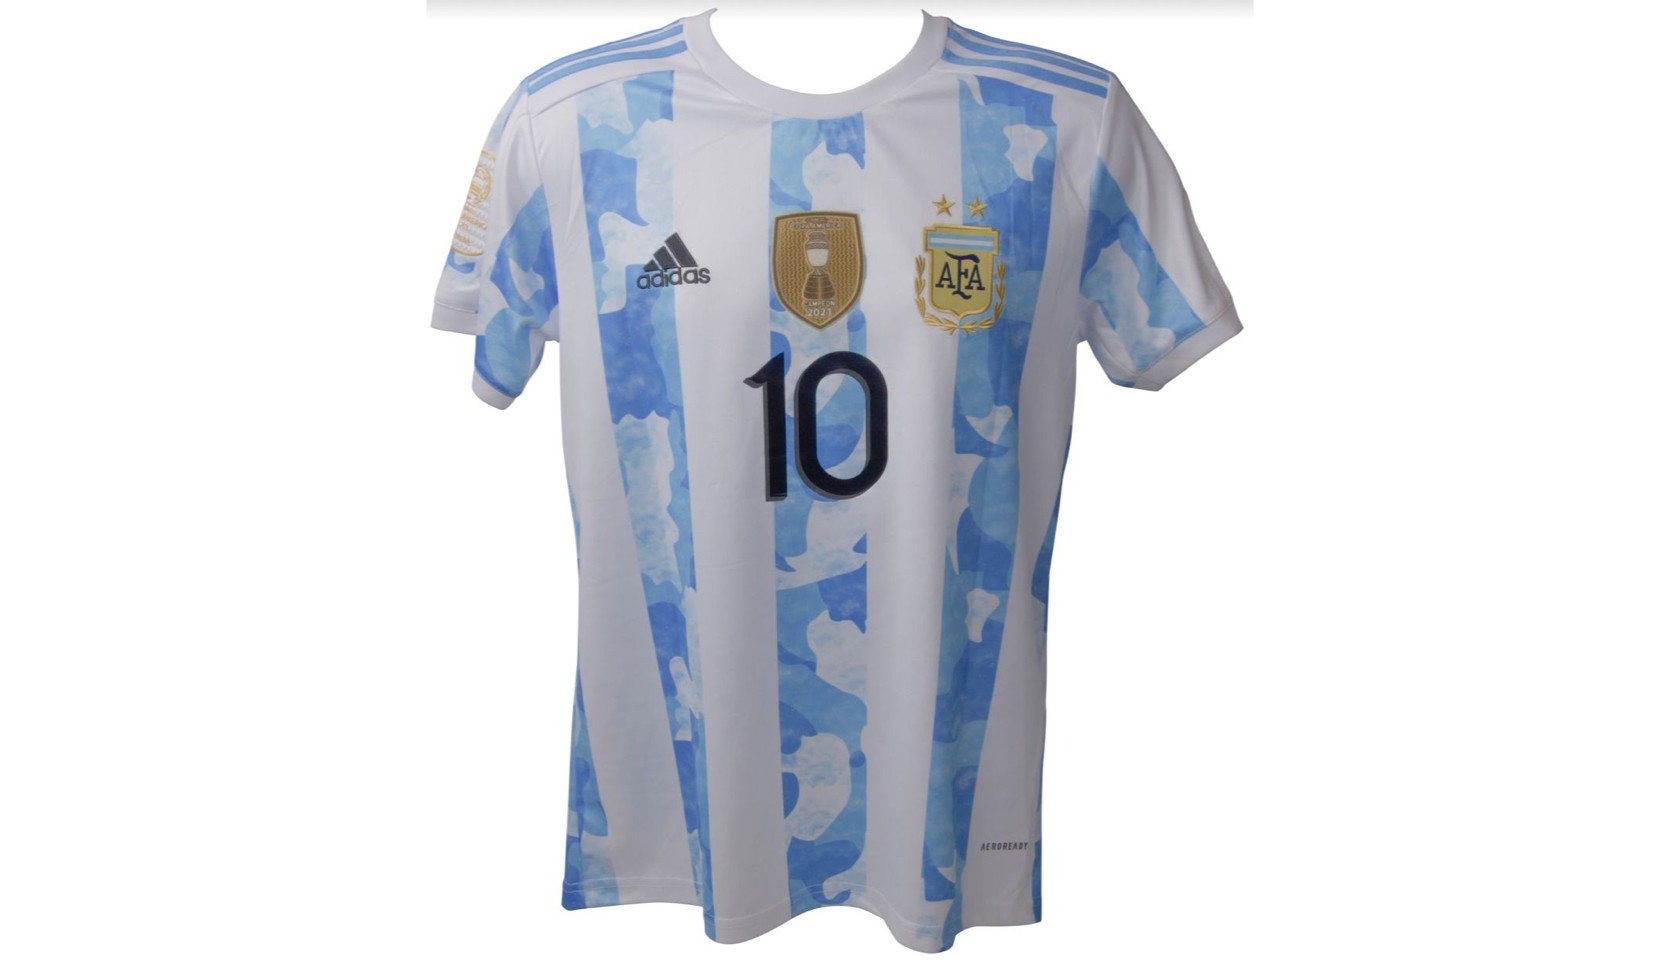 Lionel Messi Signed Official Argentina National Team Shirt